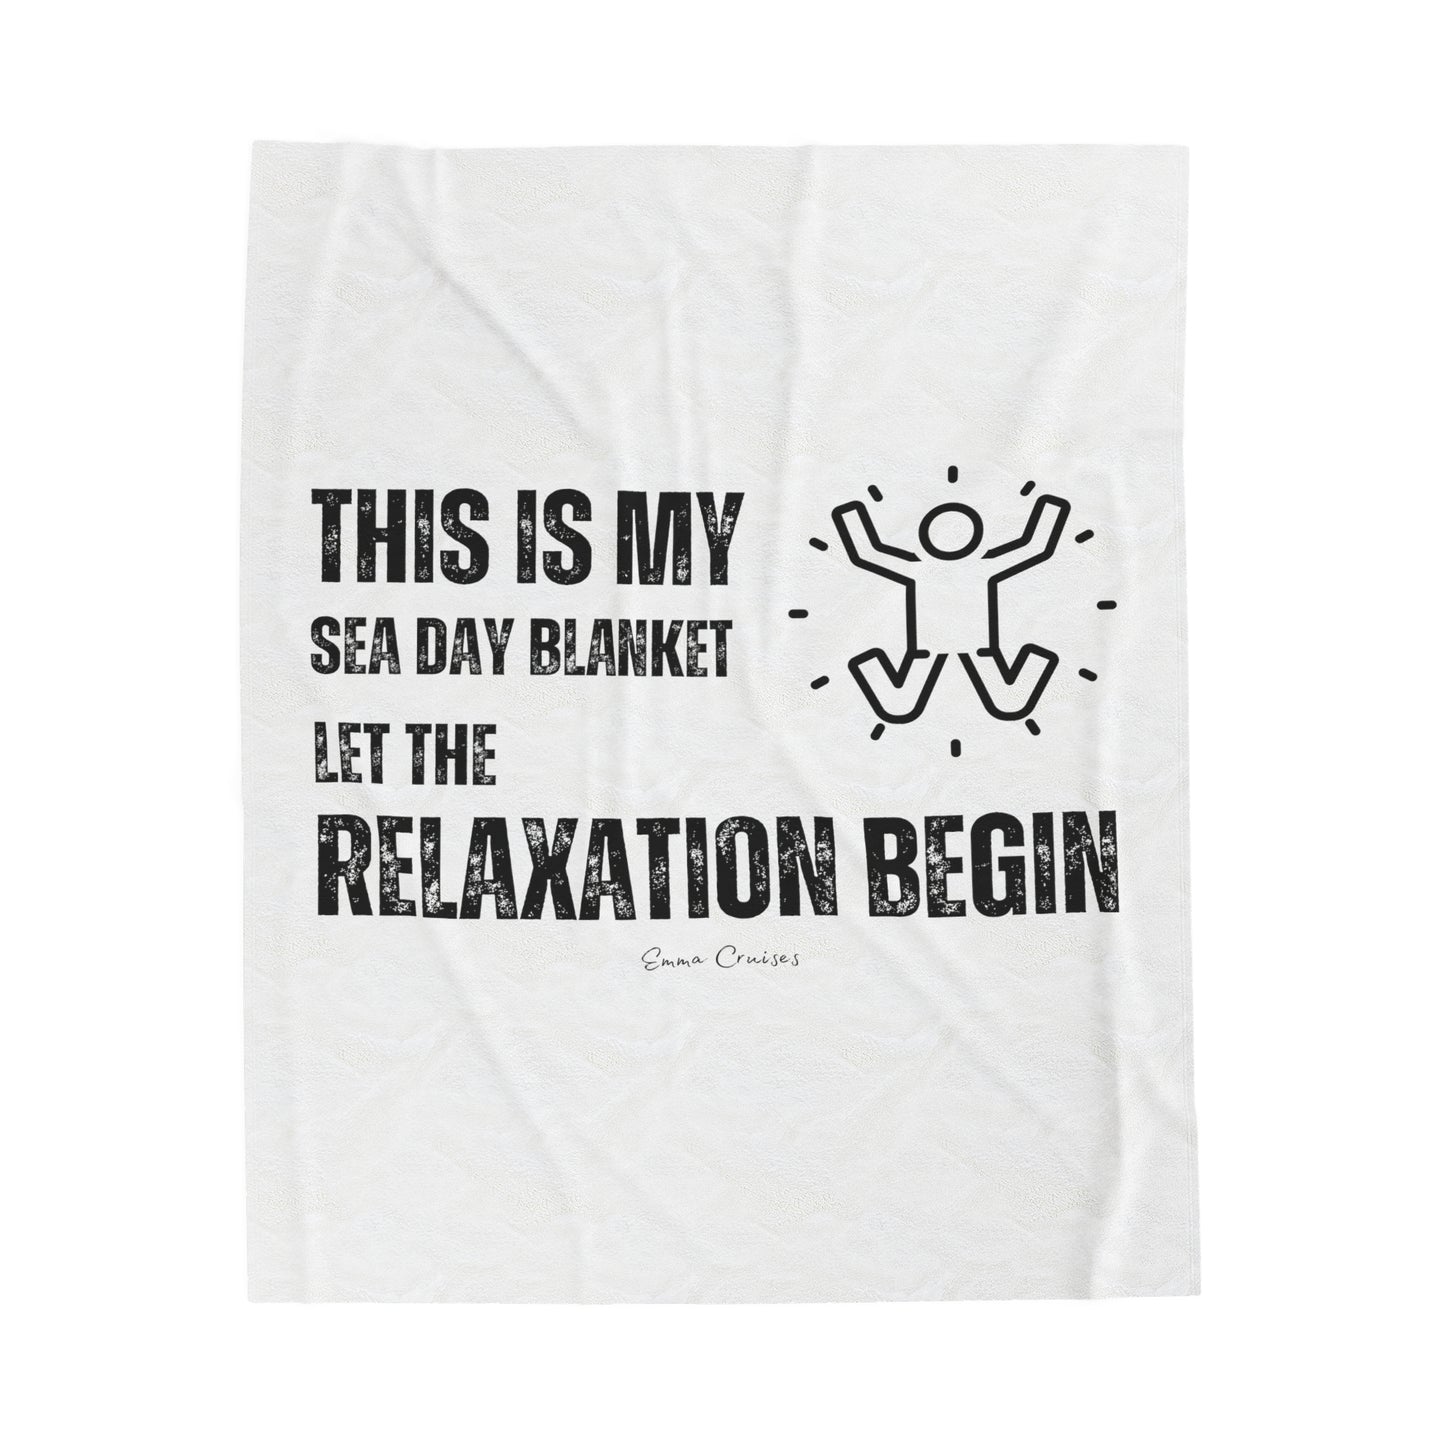 This is My Sea Day Blanket - Velveteen Plush Blanket